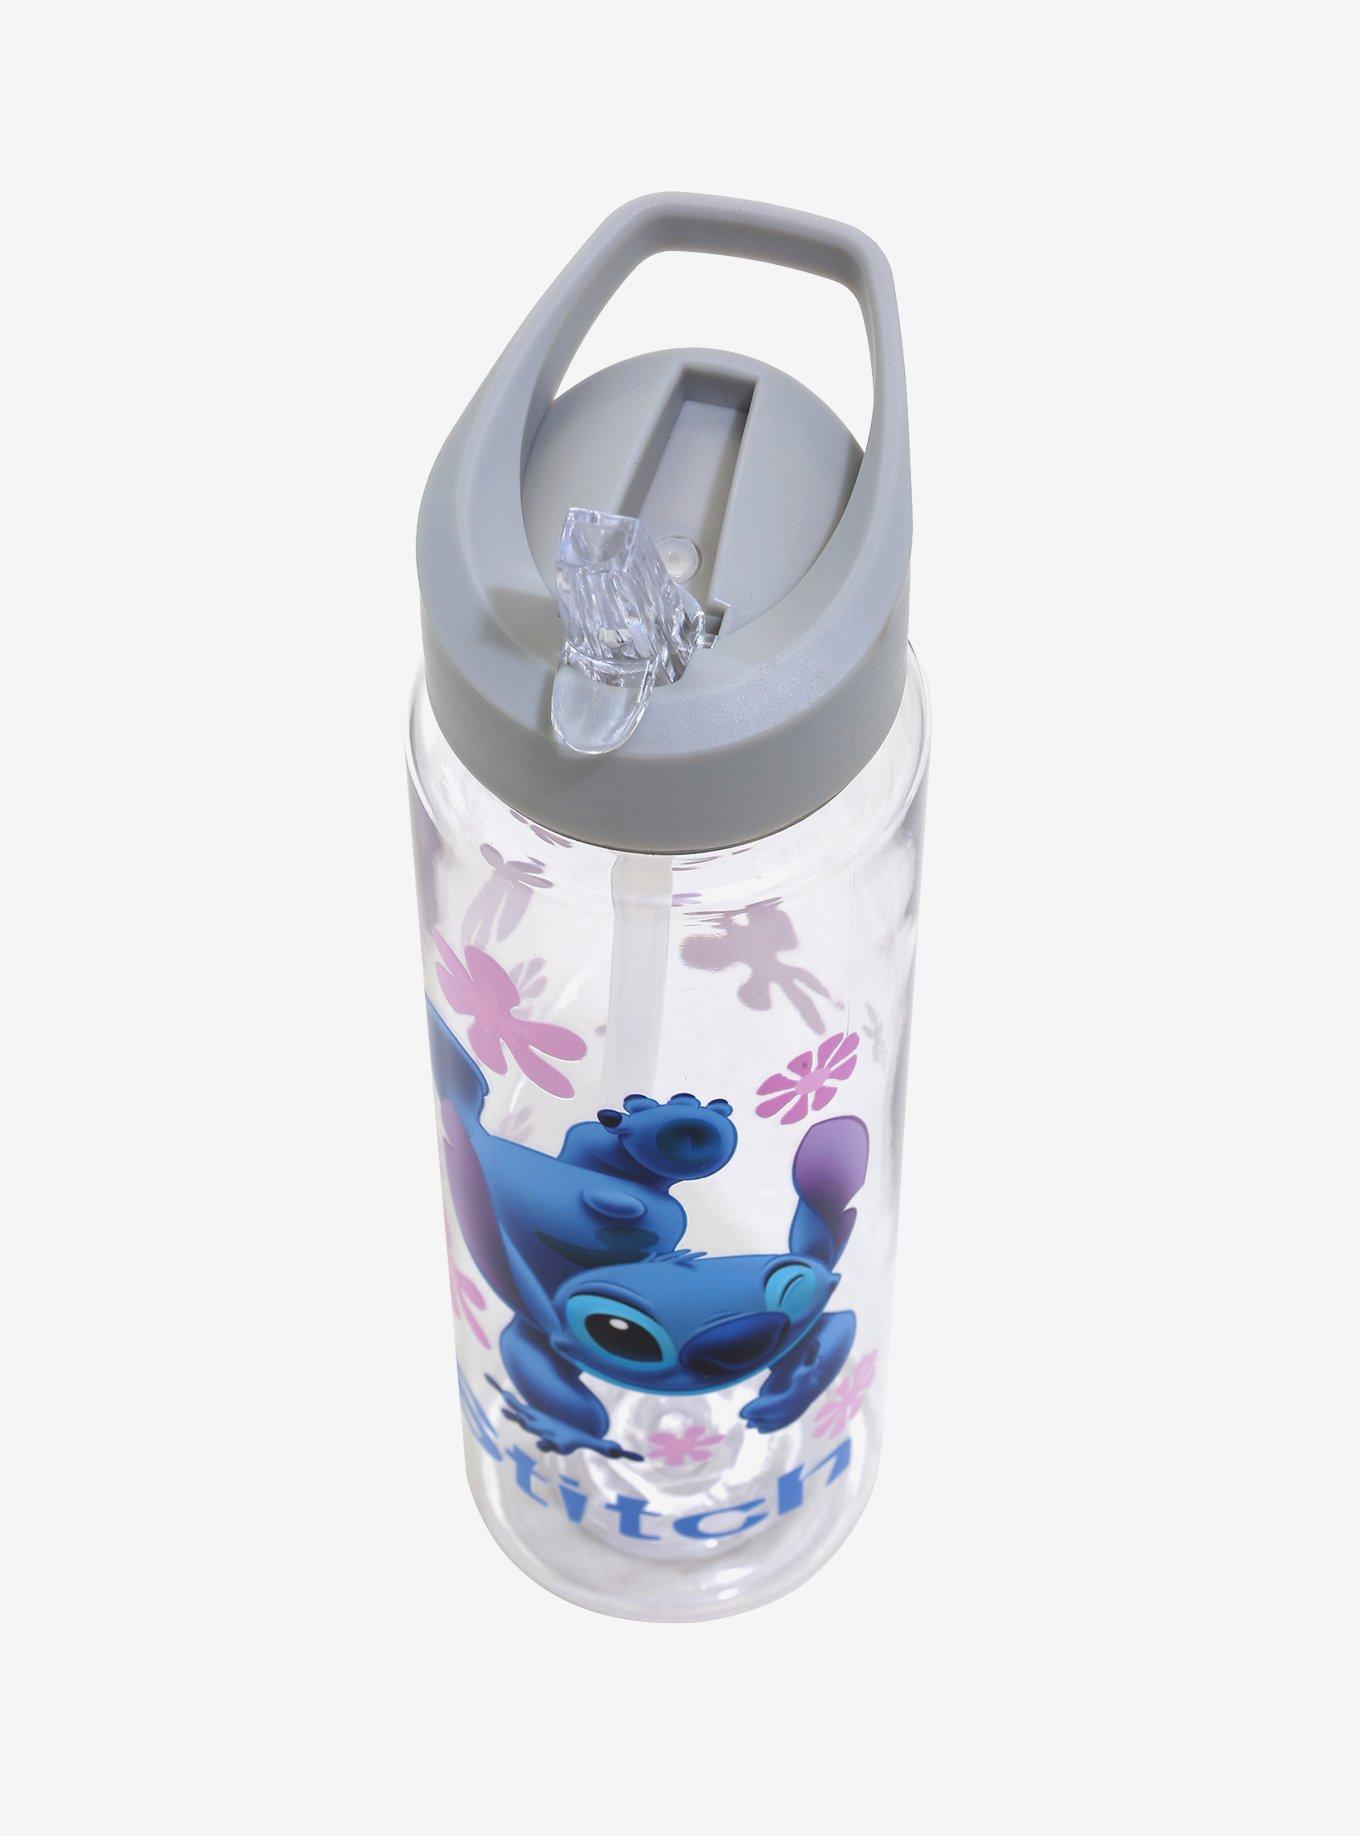 Disney Lilo & Stitch Aloha Curved Water Bottle, Hot Topic